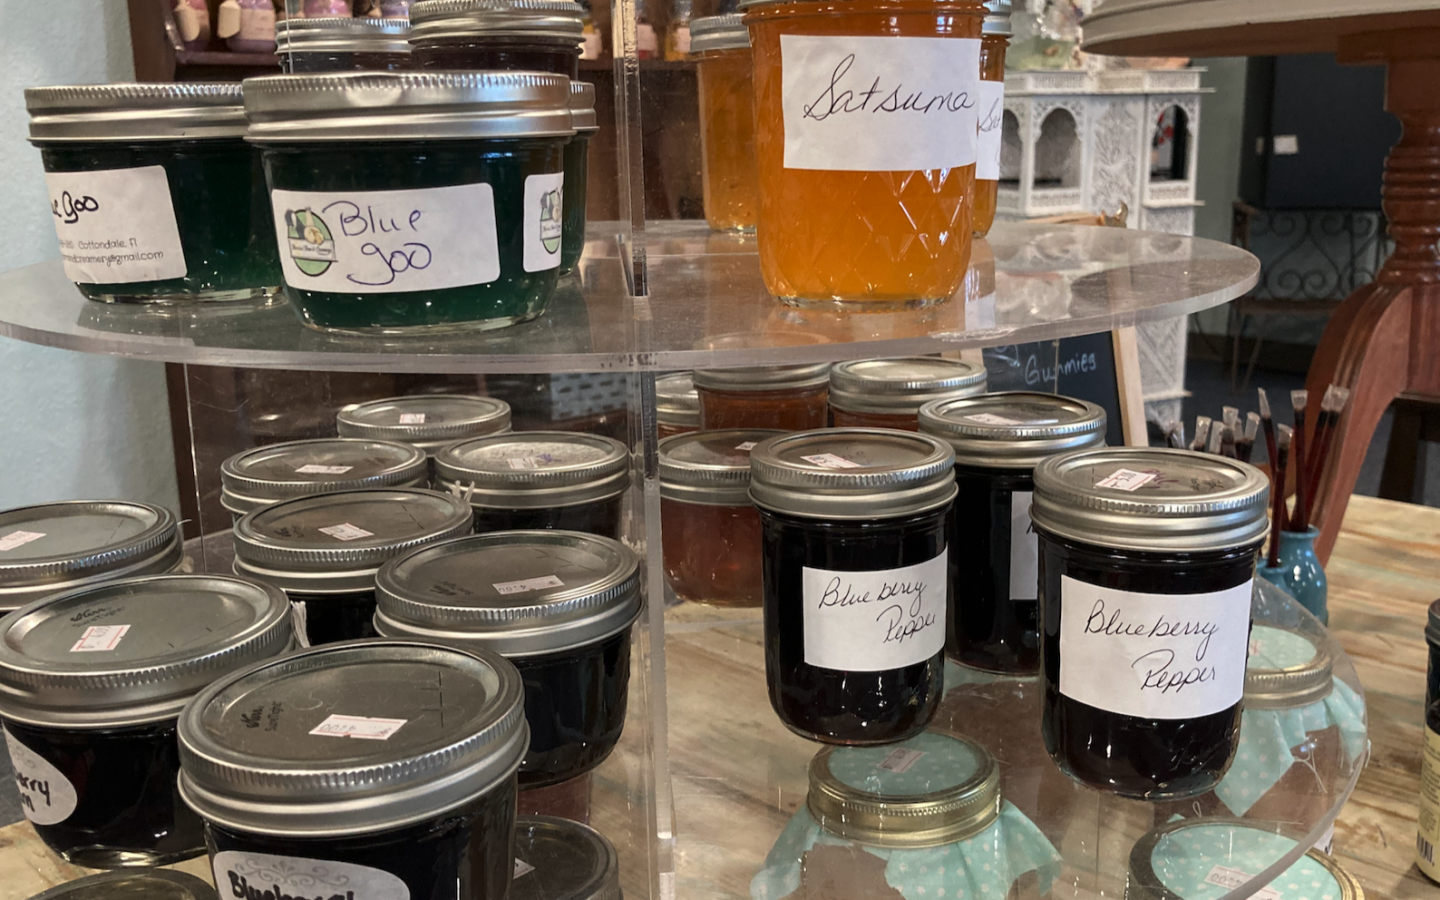 homemade jams and jellies in jars